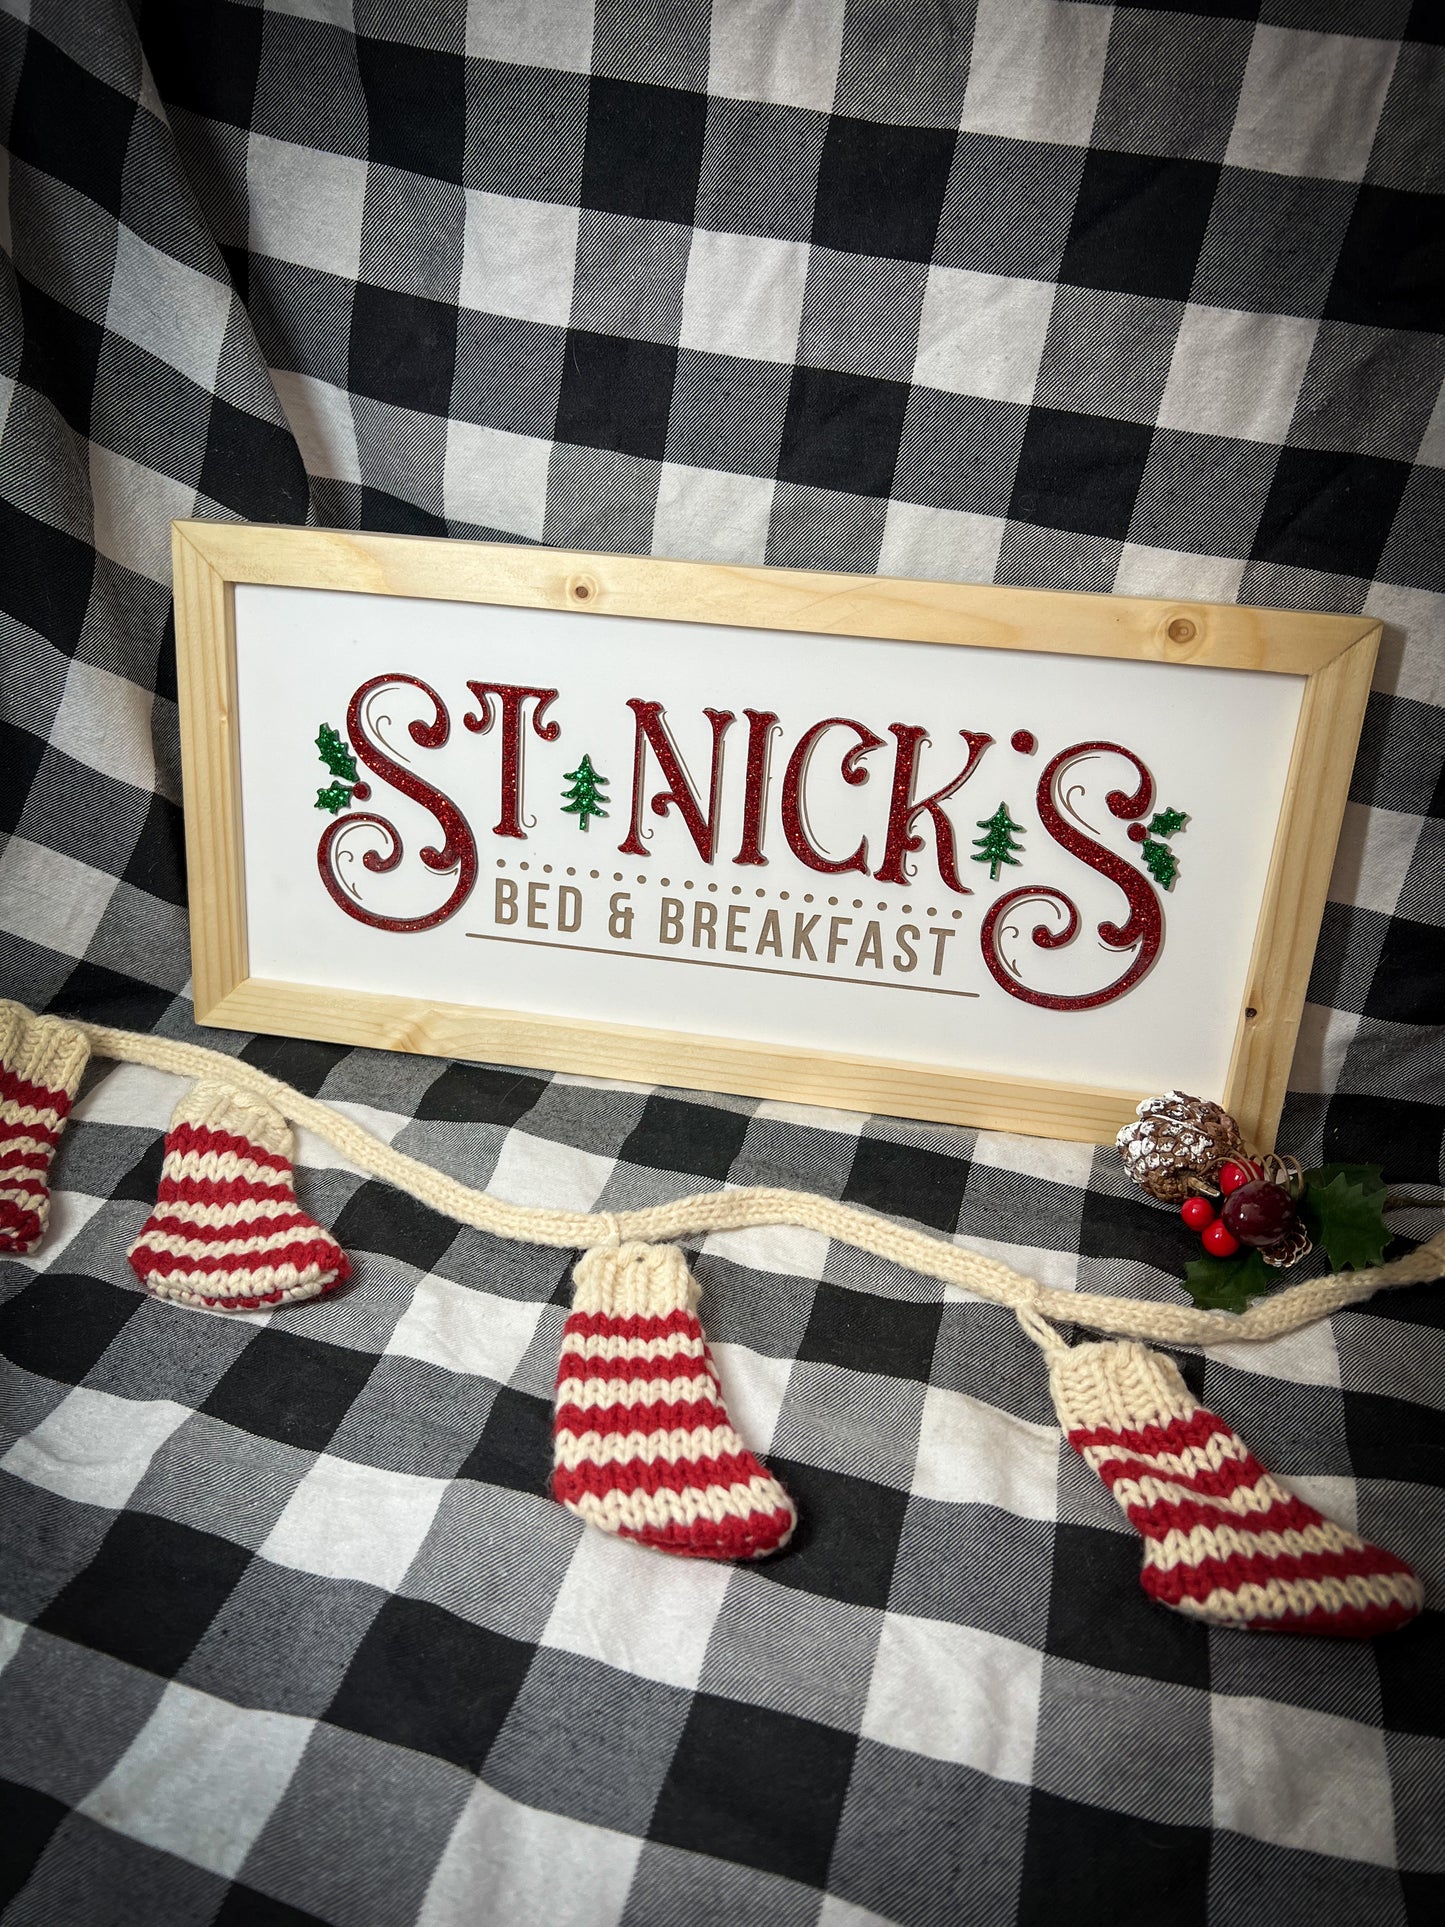 St. Nick's Bed & Breakfast